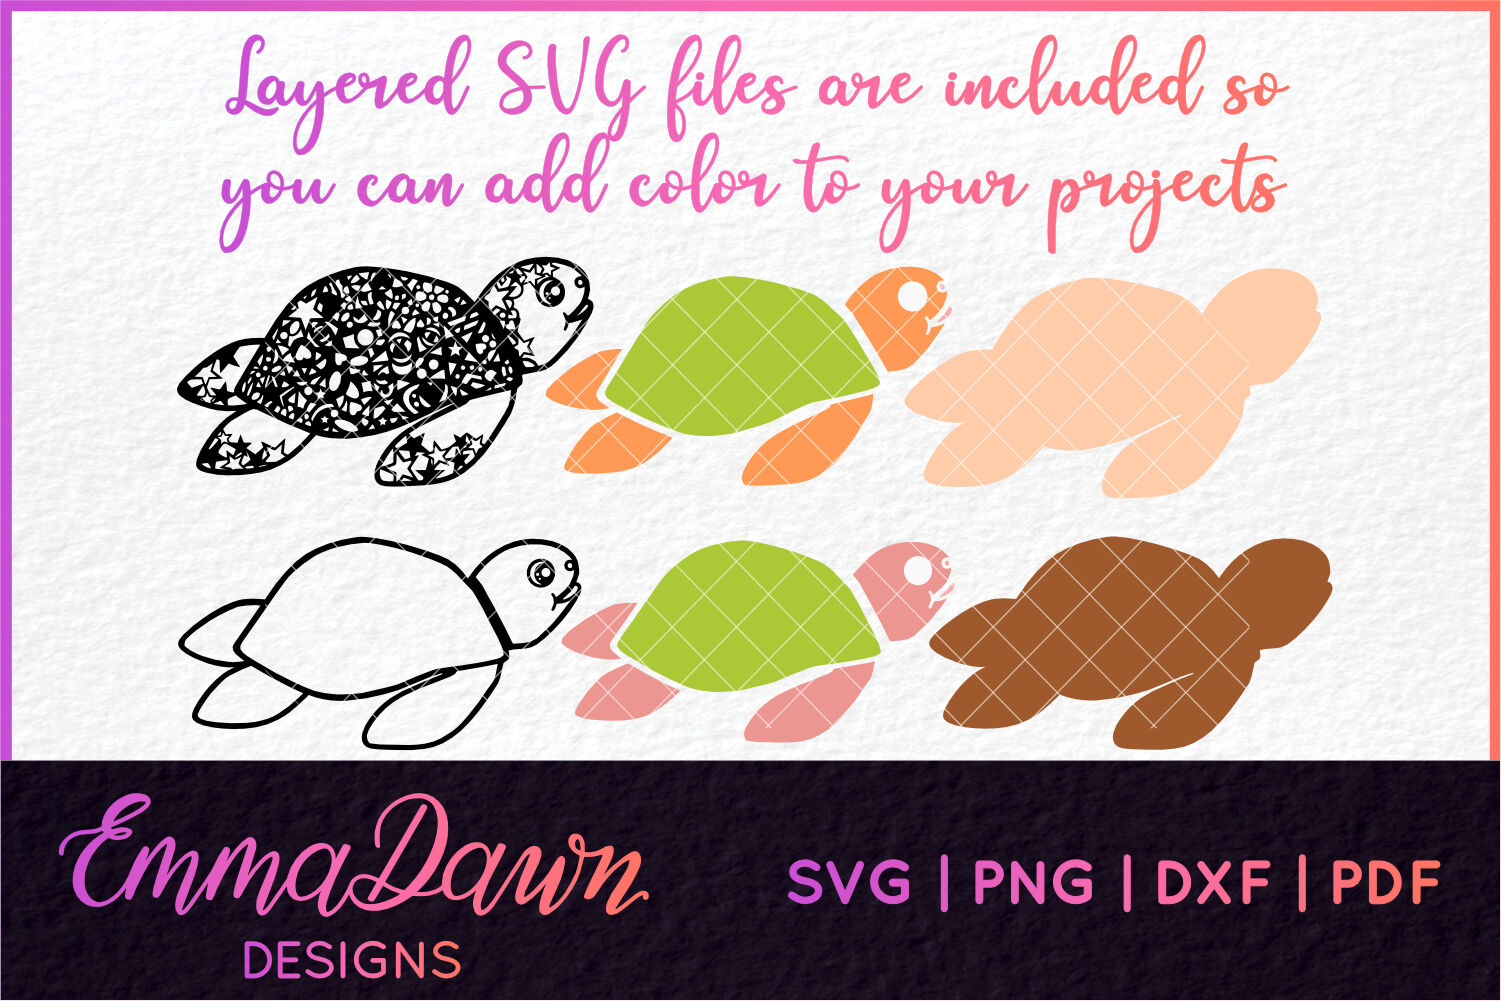 Download Noah The Turtle Mandala Zentangle Design Svg By Emma Dawn Designs Thehungryjpeg Com